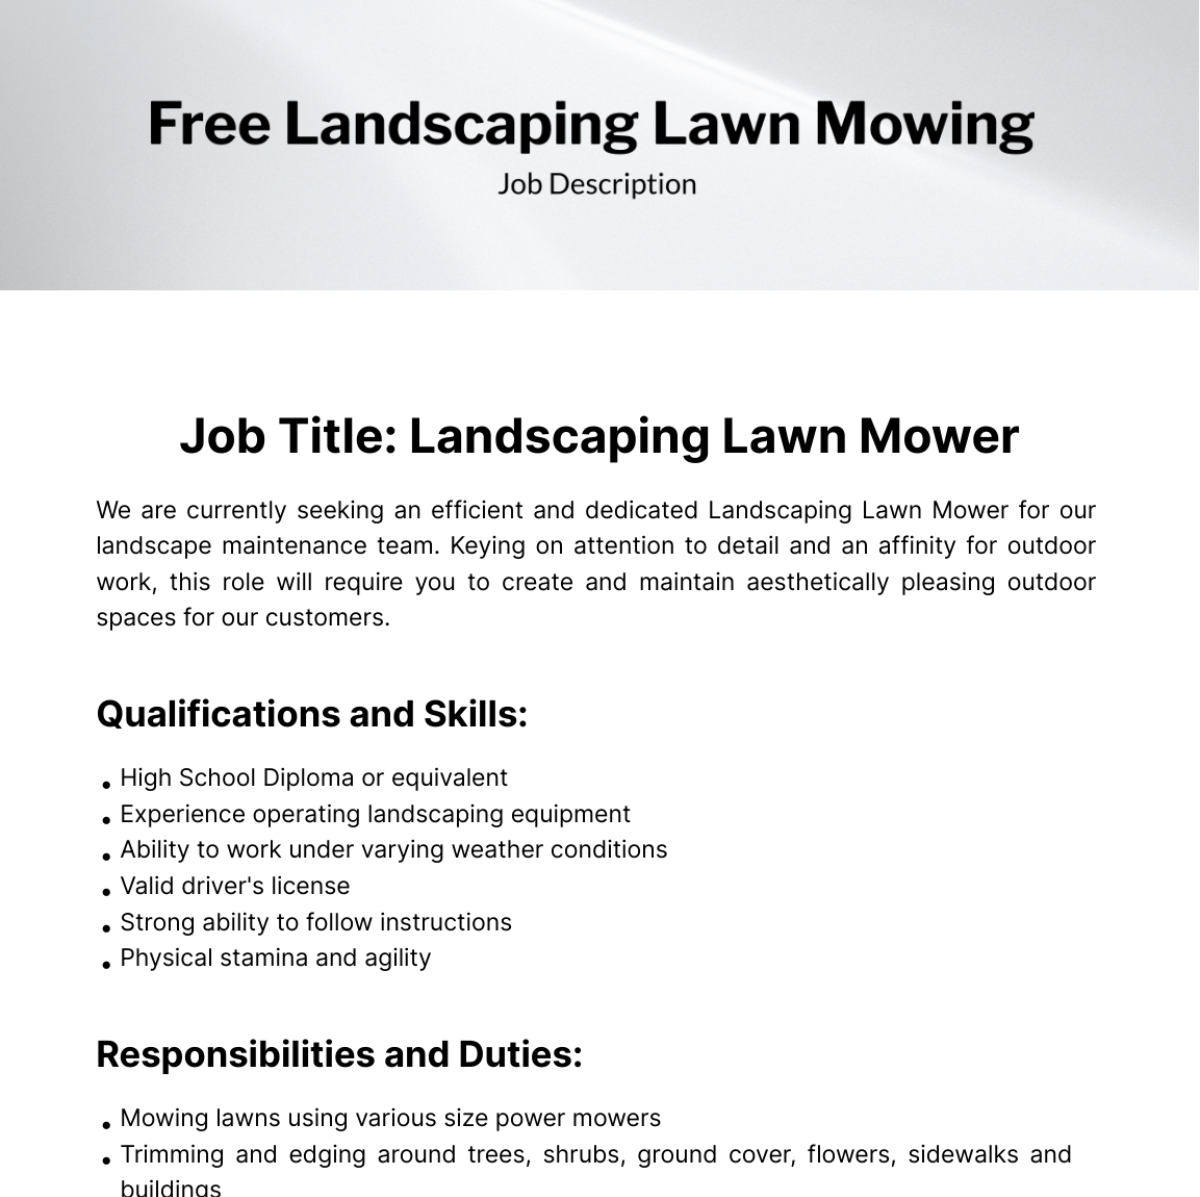 Free Landscaping Lawn Mowing Job Description Template